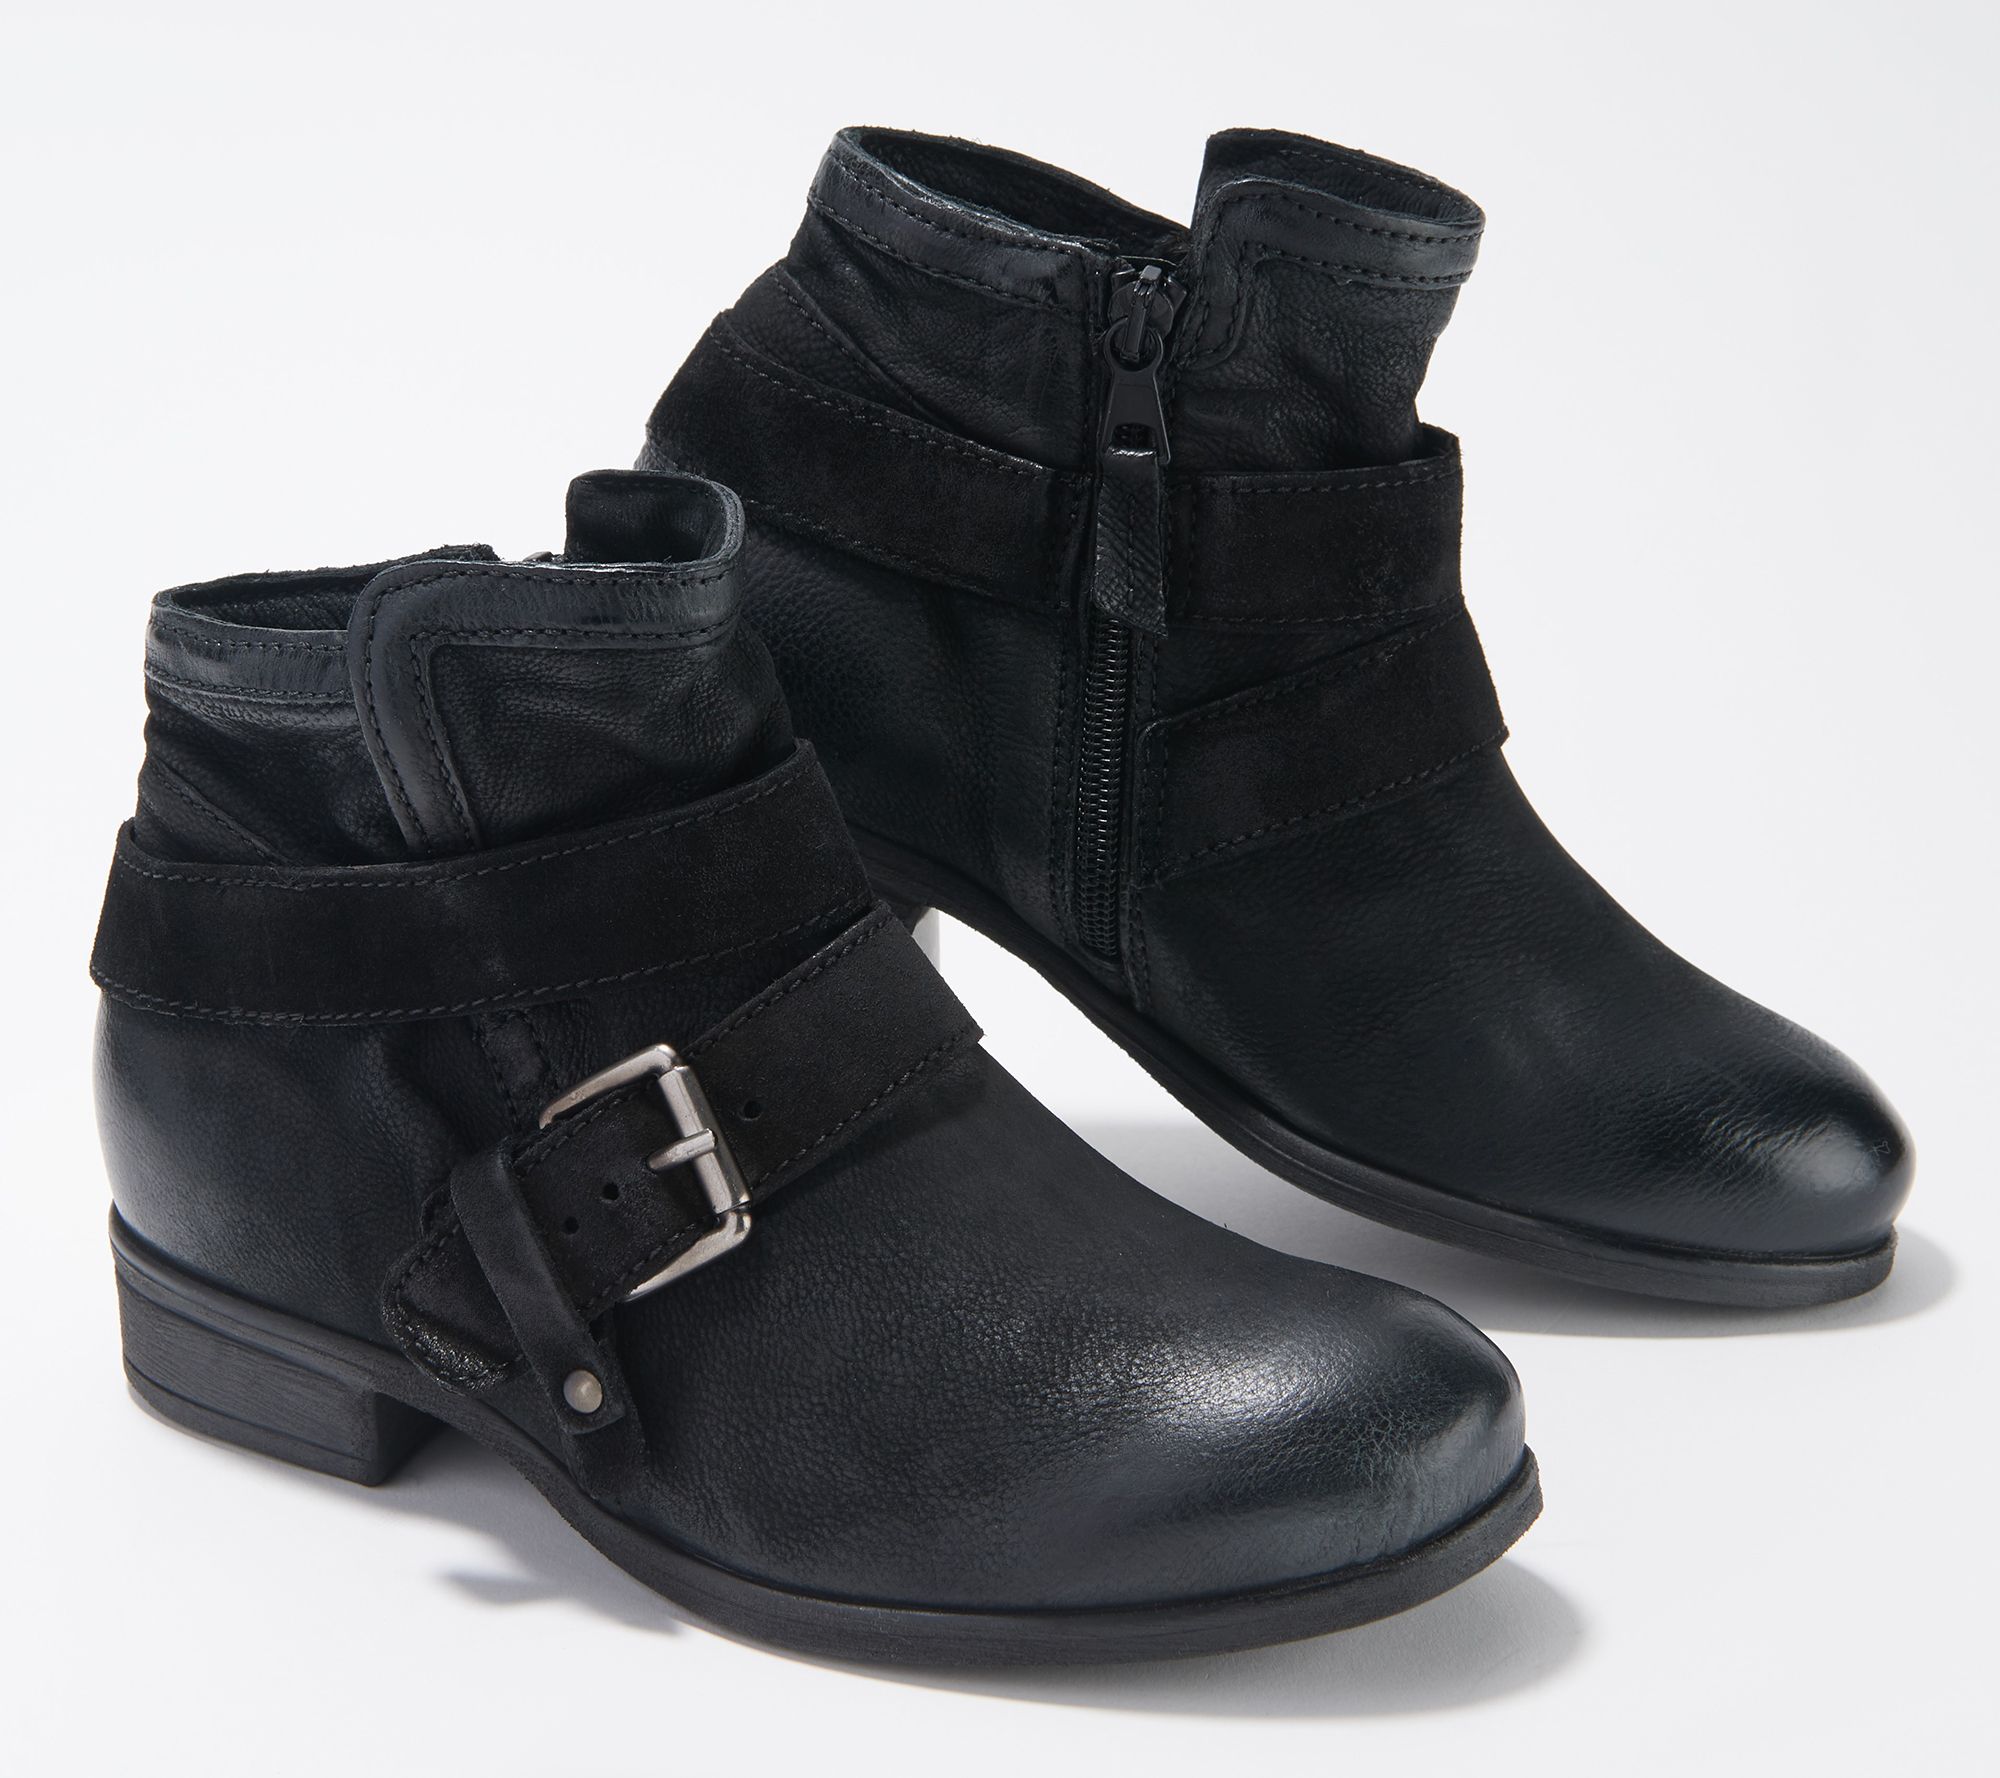 Miz Mooz Leather Buckle Wide Width Ankle Boots -Shane in Black 